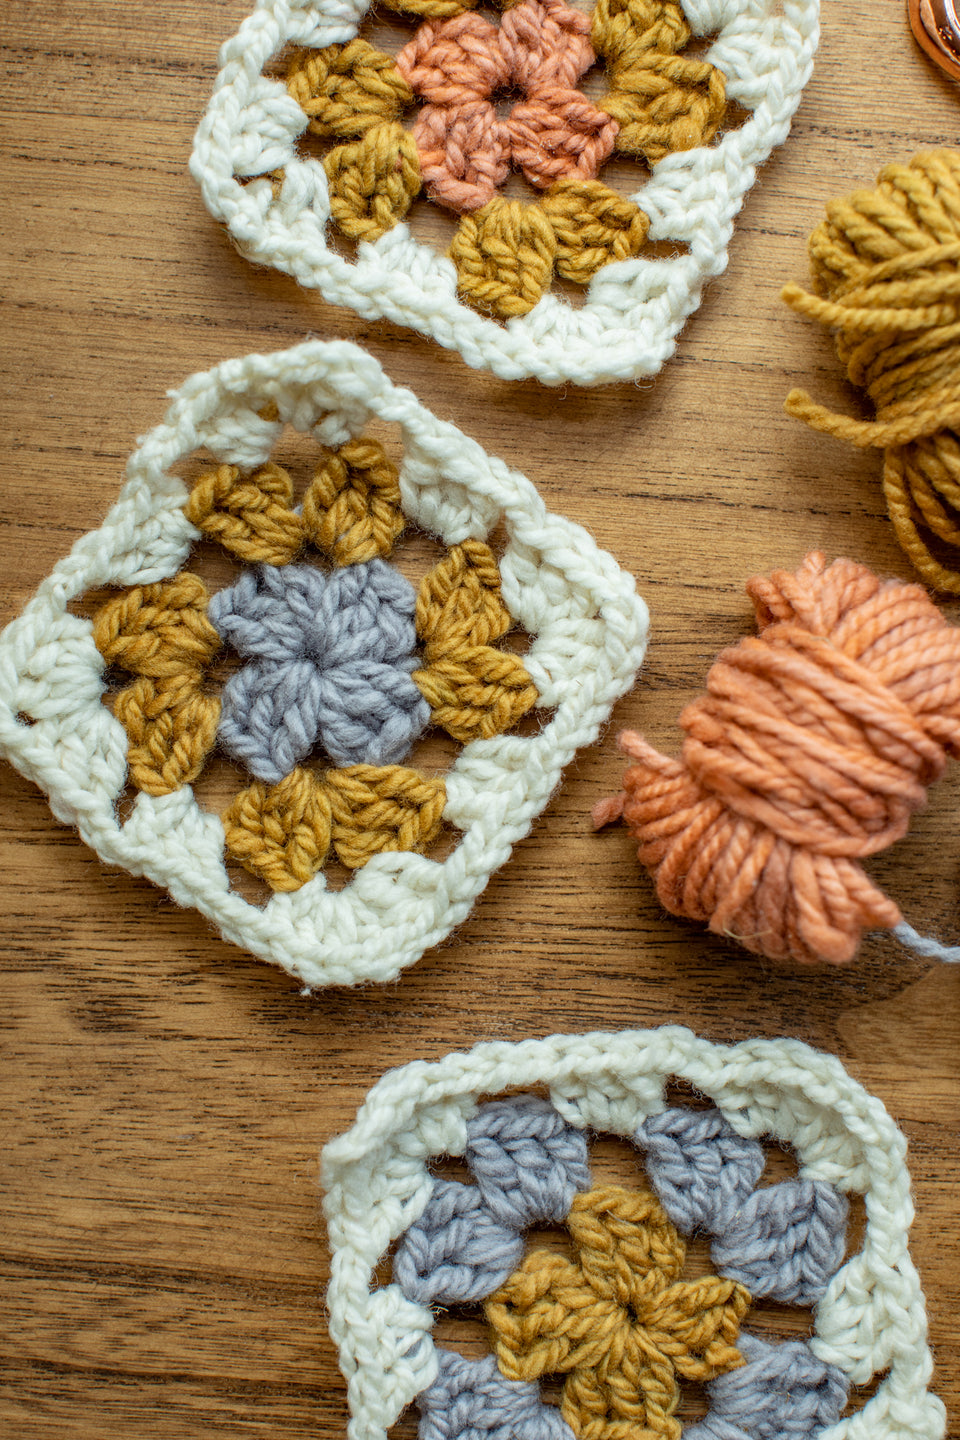 Crochet Month at Hillfolk!